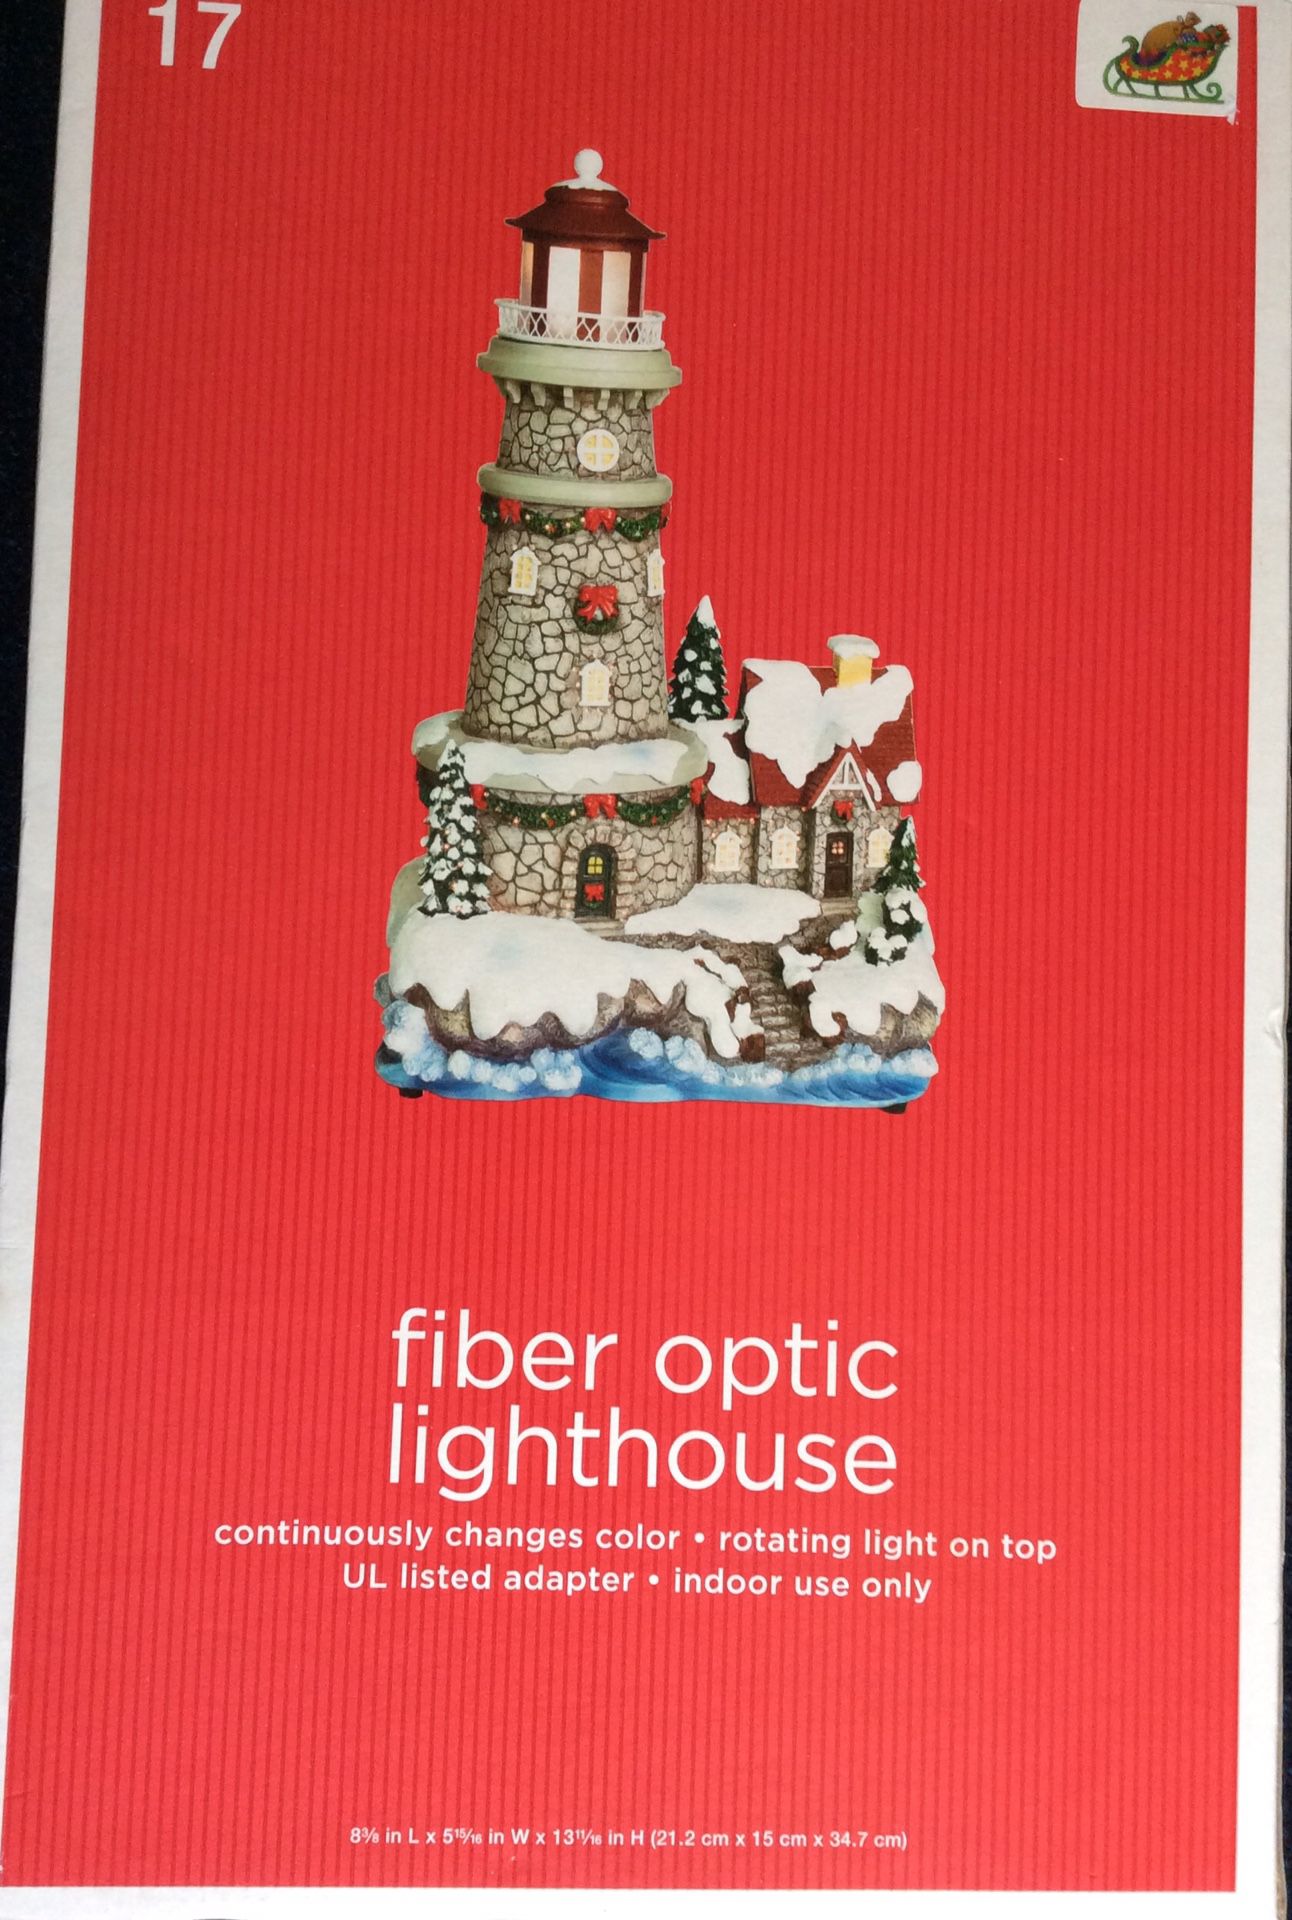 Fiber optic lighthouse-lights up